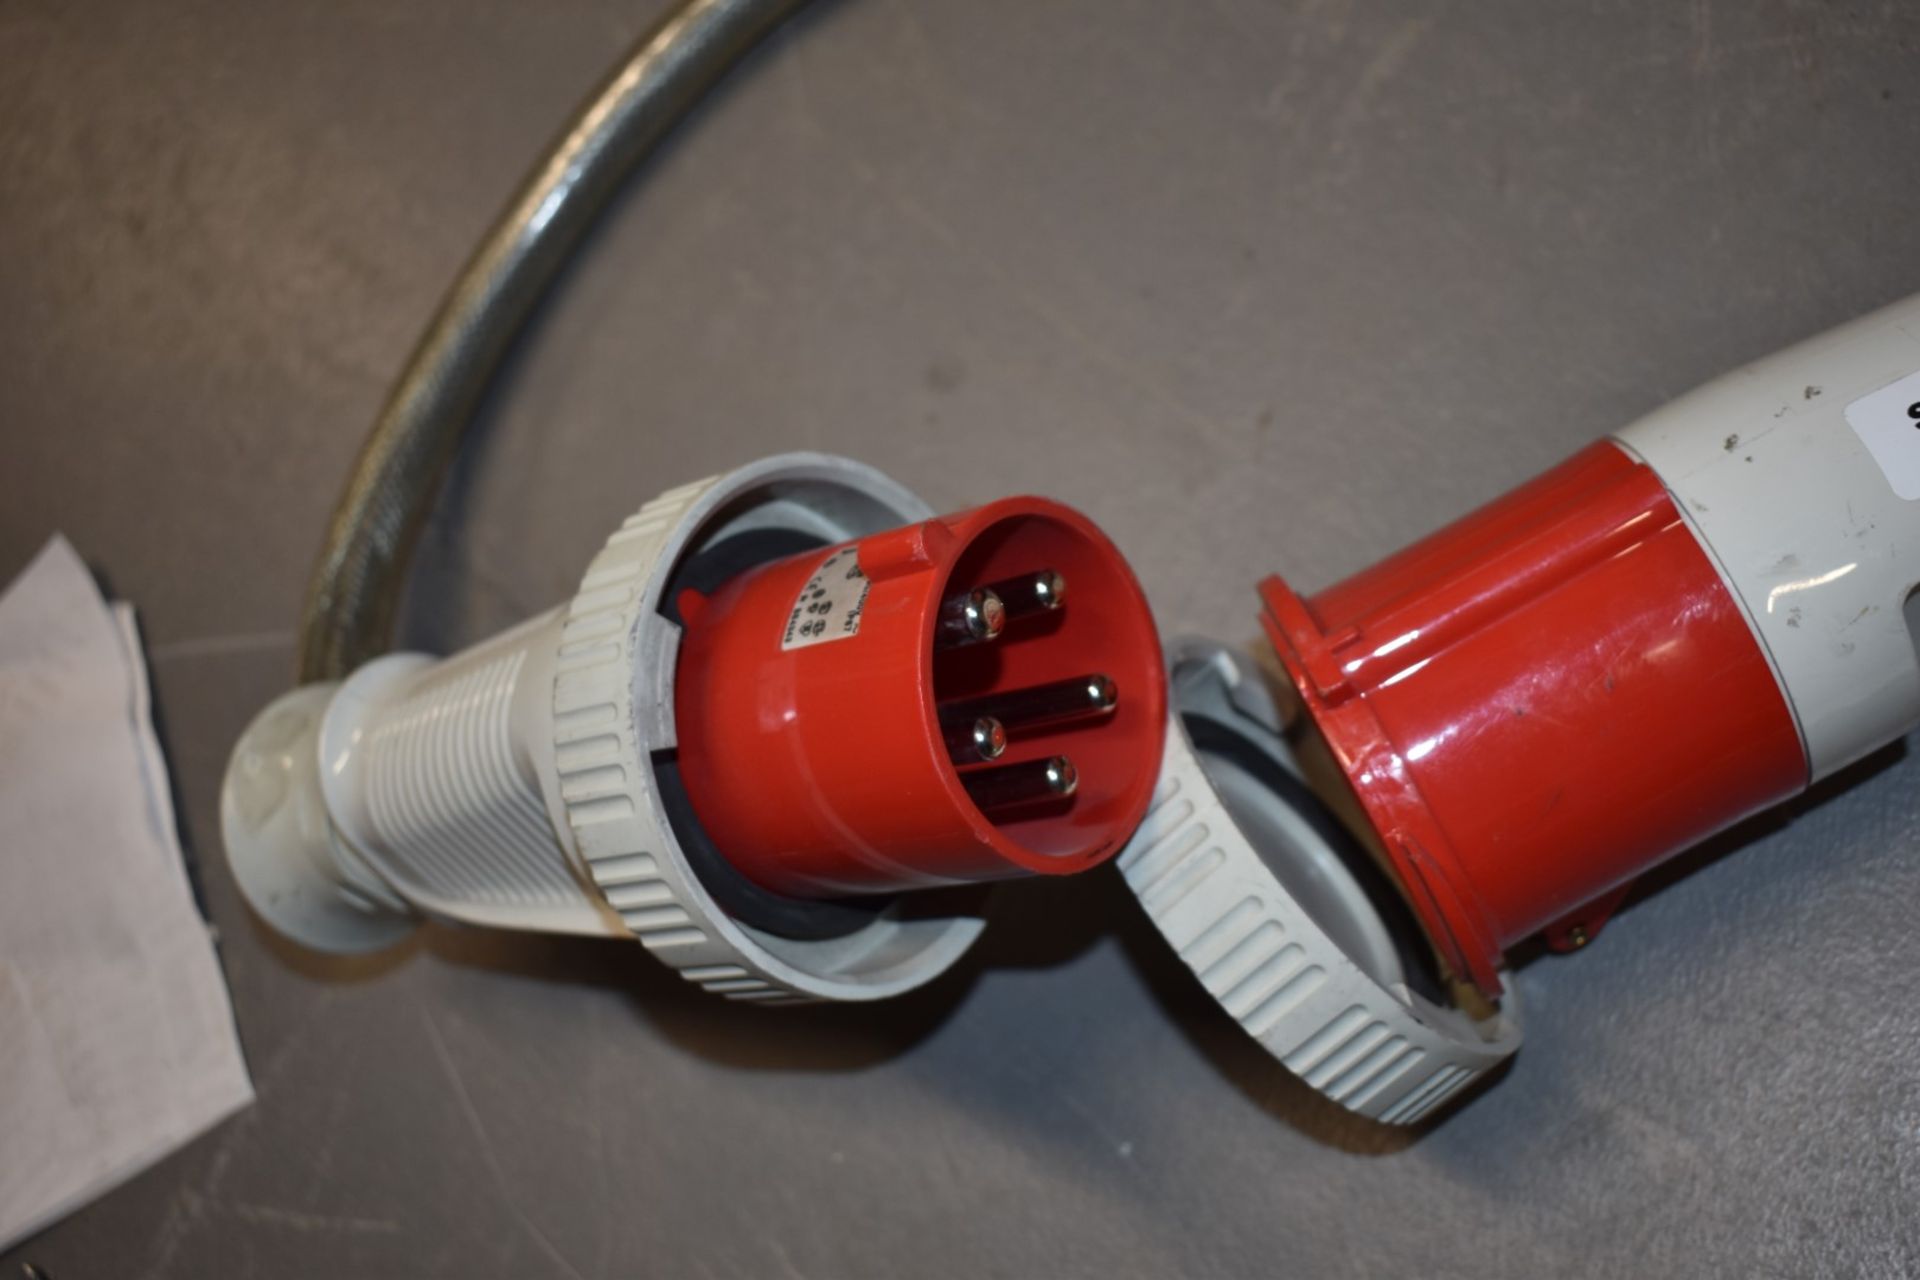 1 x Plug Adaptor for 3 Phase Sockets SRB170 - Image 2 of 5